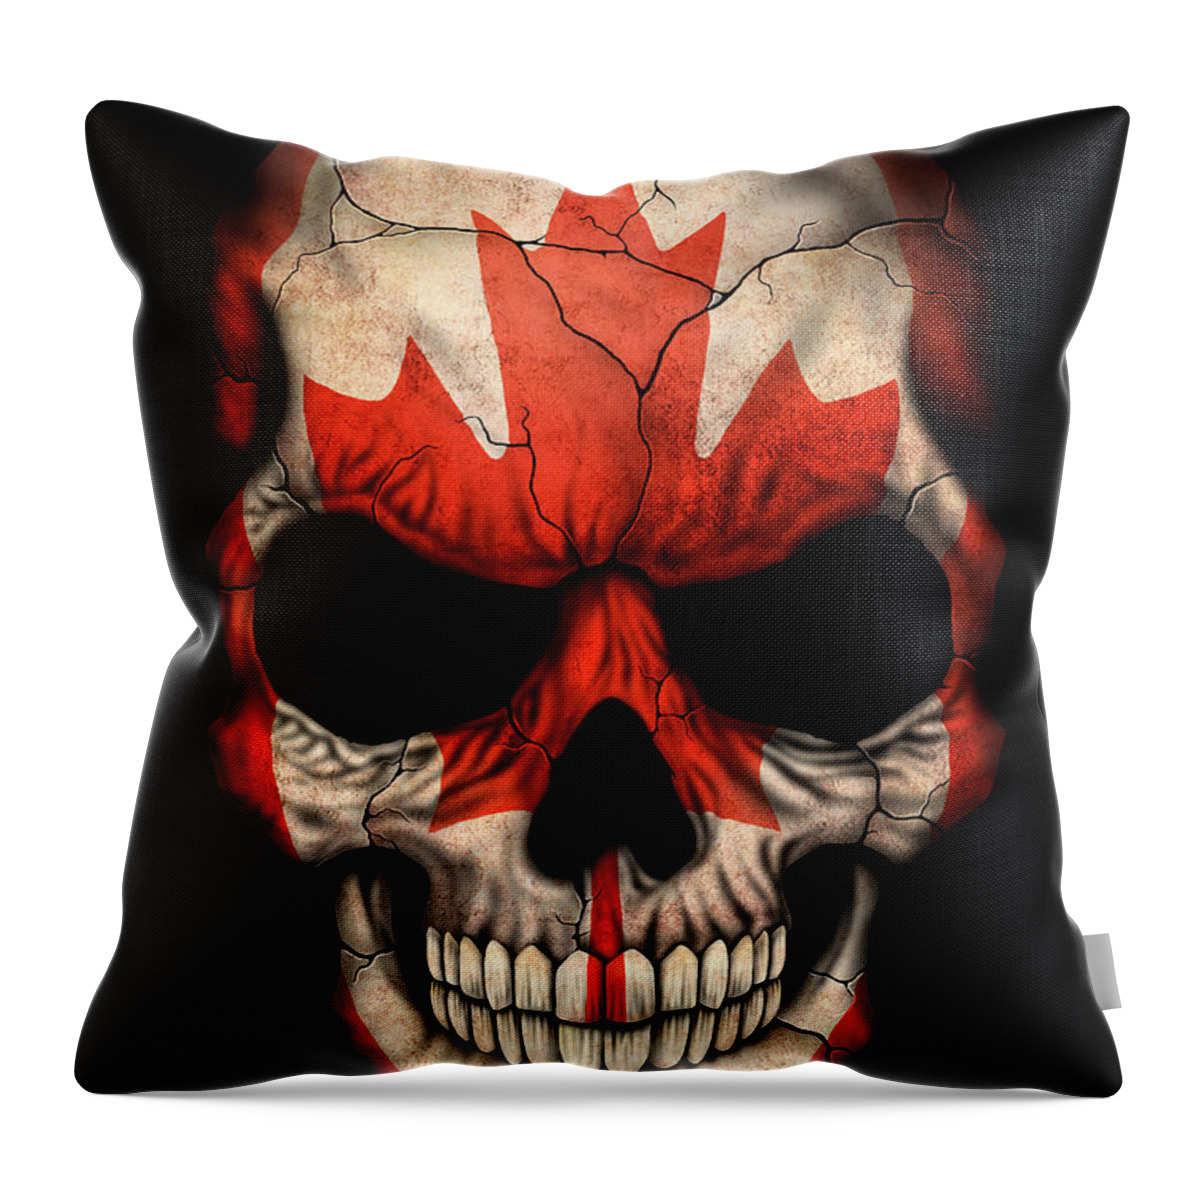 Skull Throw Pillow featuring the digital art Dark Canadian Flag Skull by Jeff Bartels